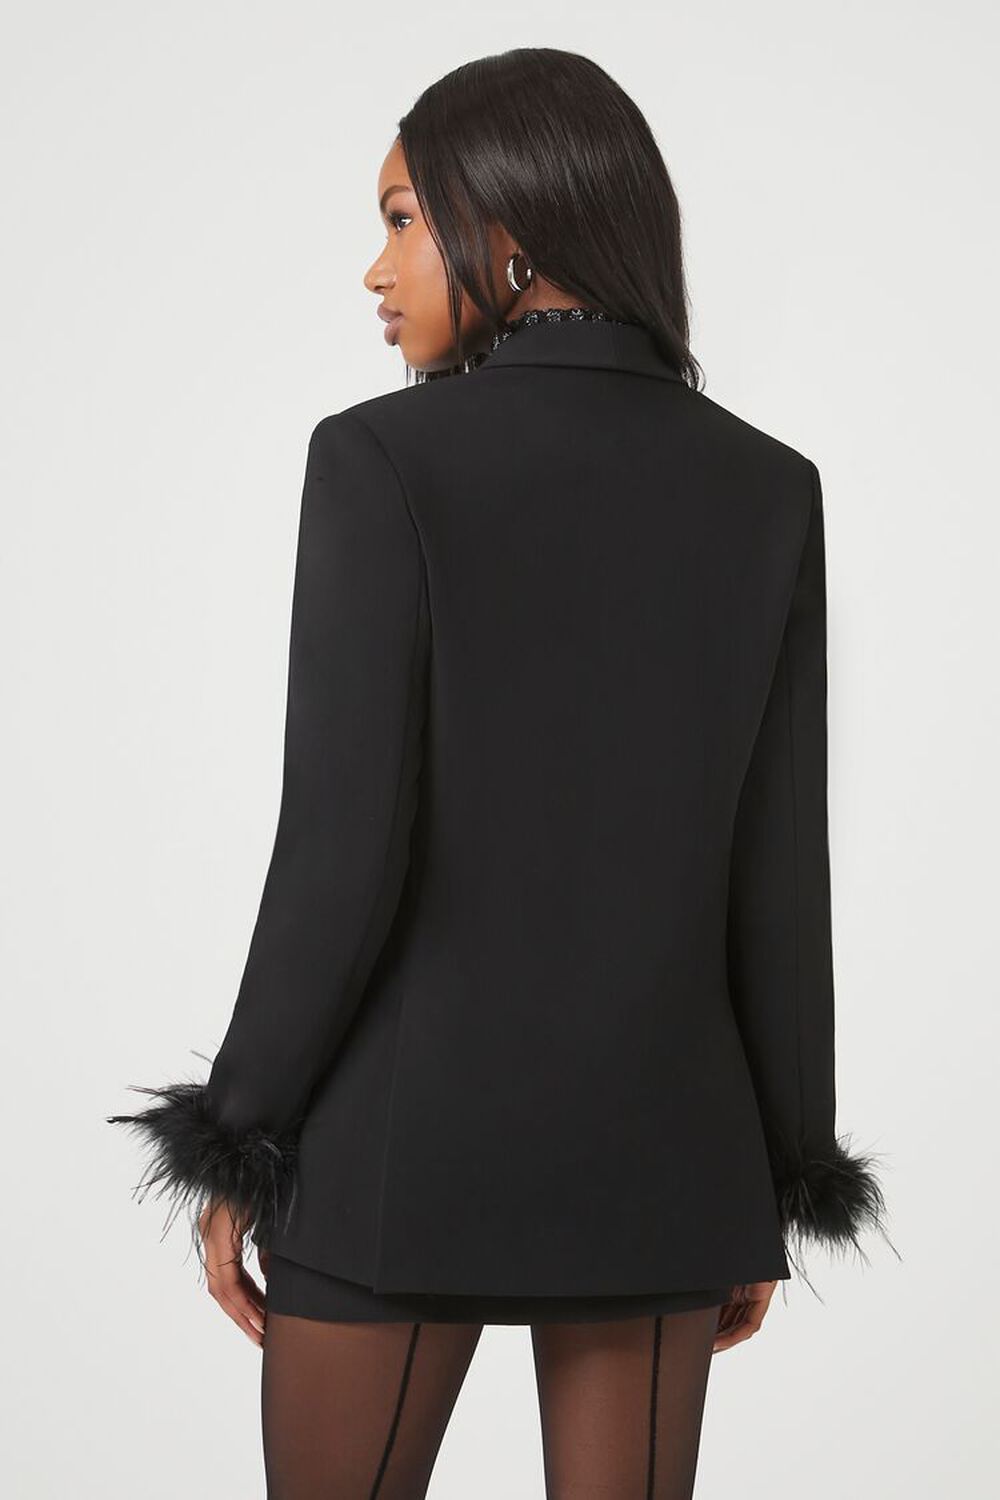 Forever 21 Blazer Jacket Suit Coat Black Satin Collar Long Sleeve 1-Button  Sz 6